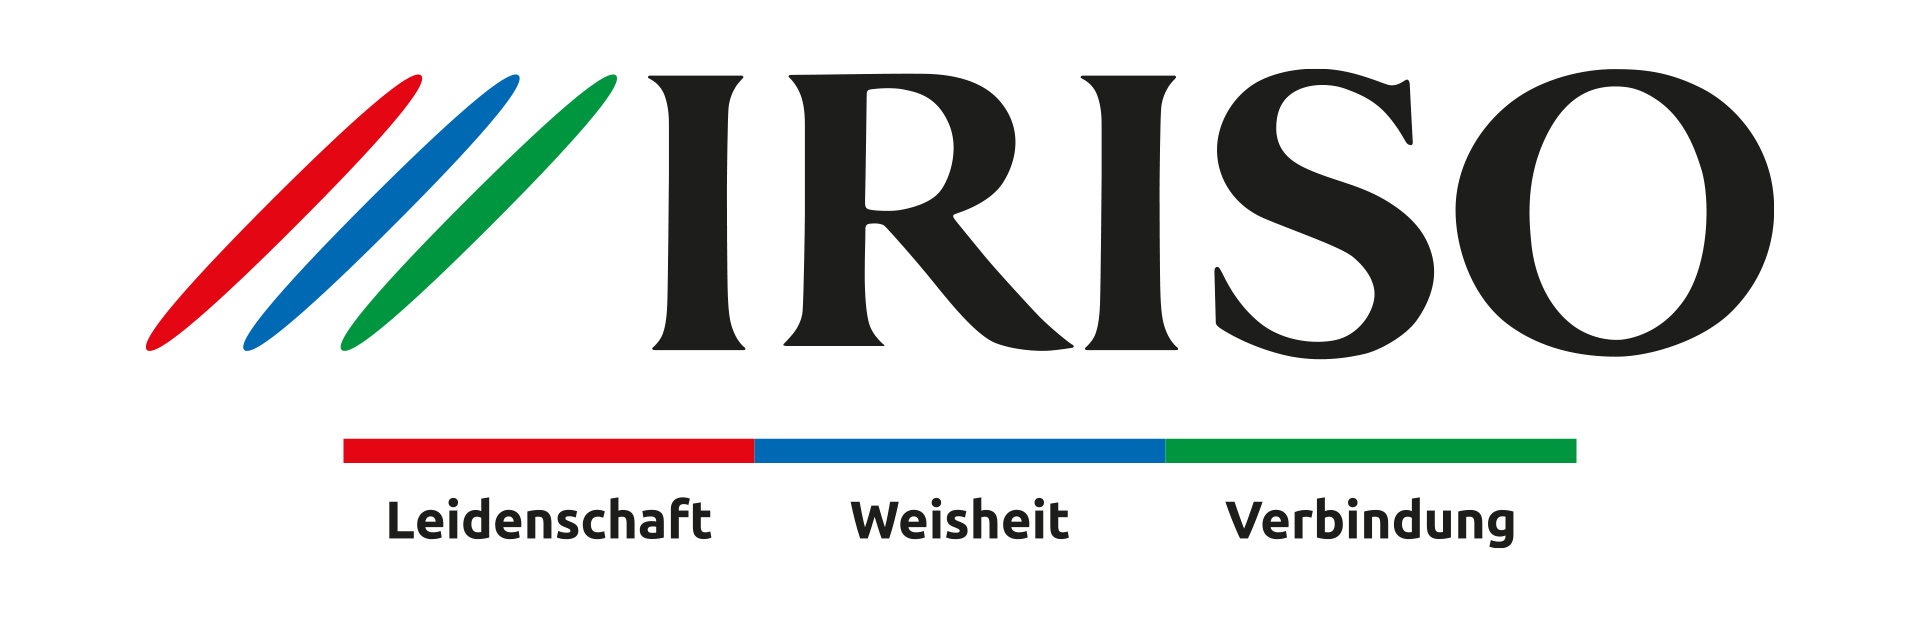 Iriso Electronics - Firmenphilosophie